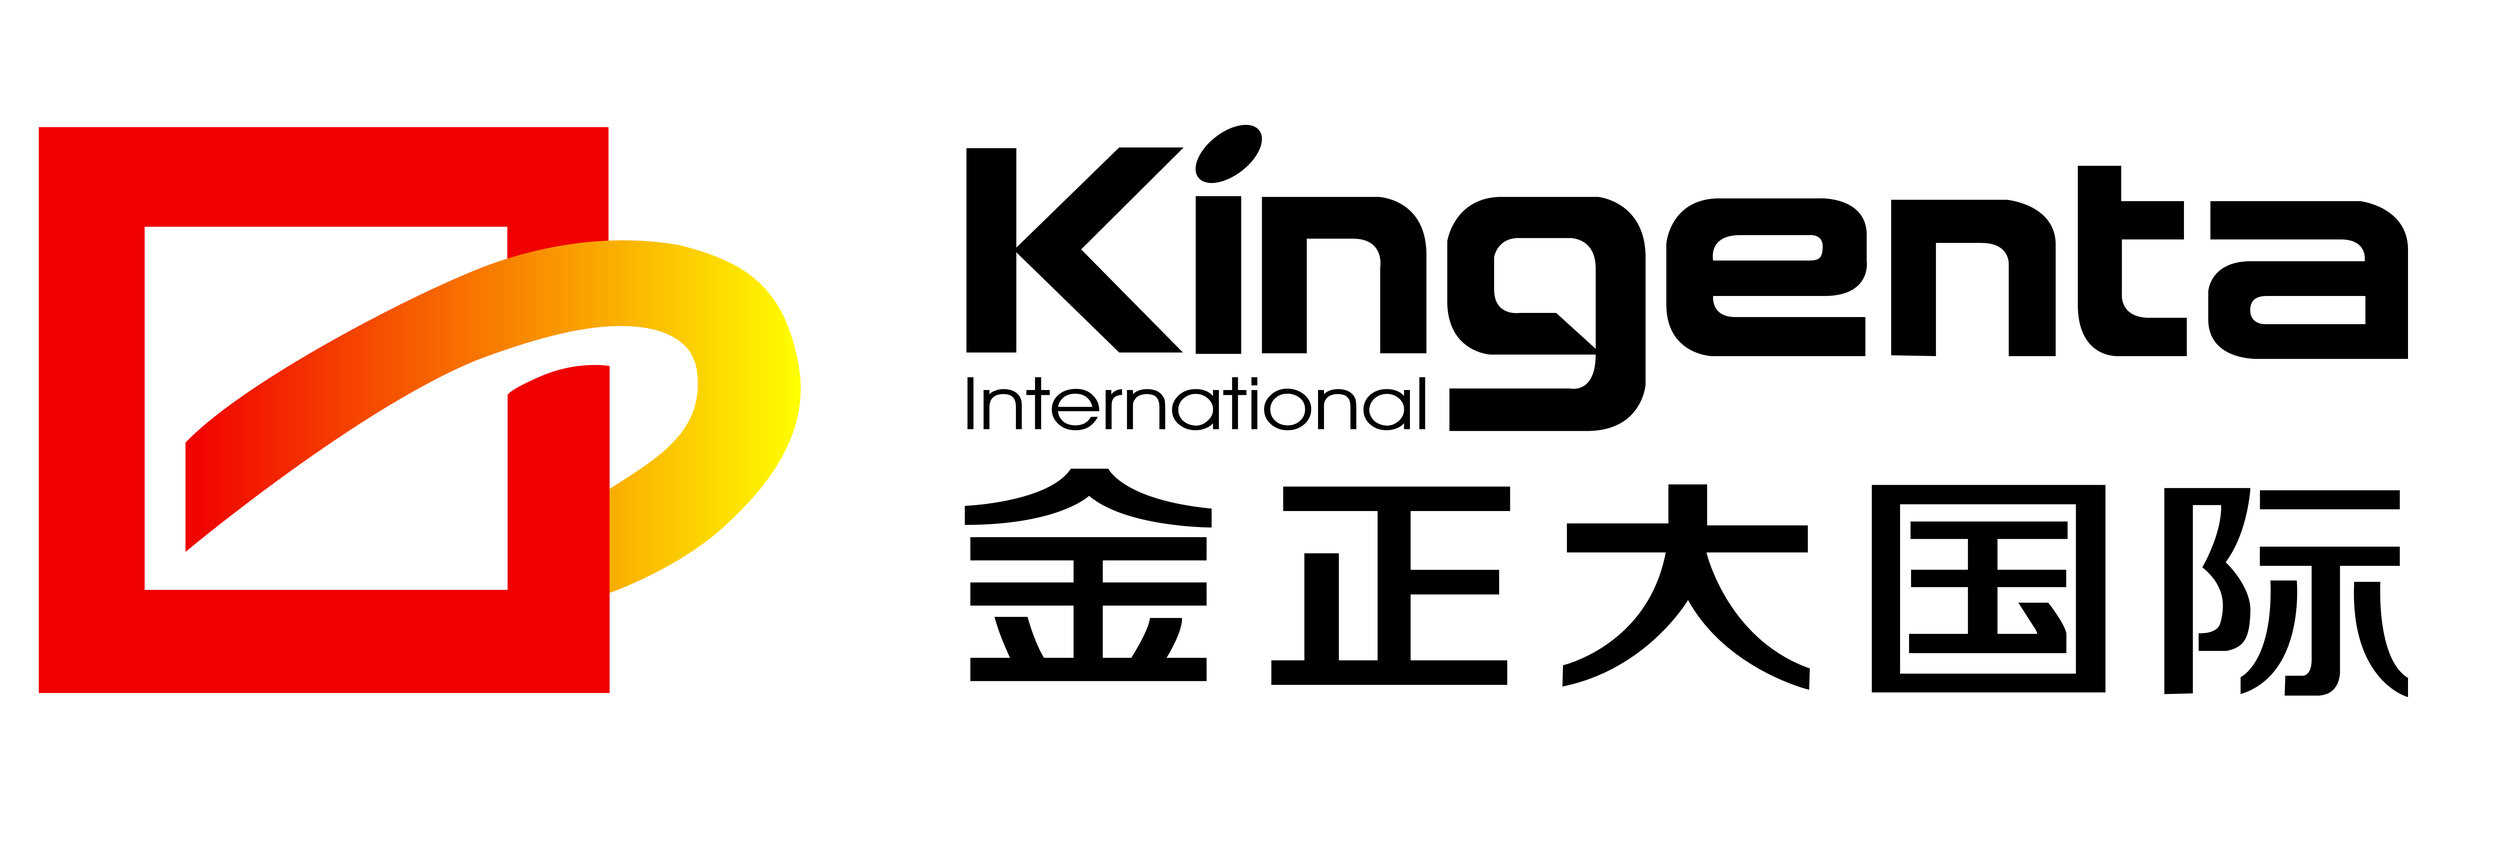 Kingenta Ecological Engineering Group Co